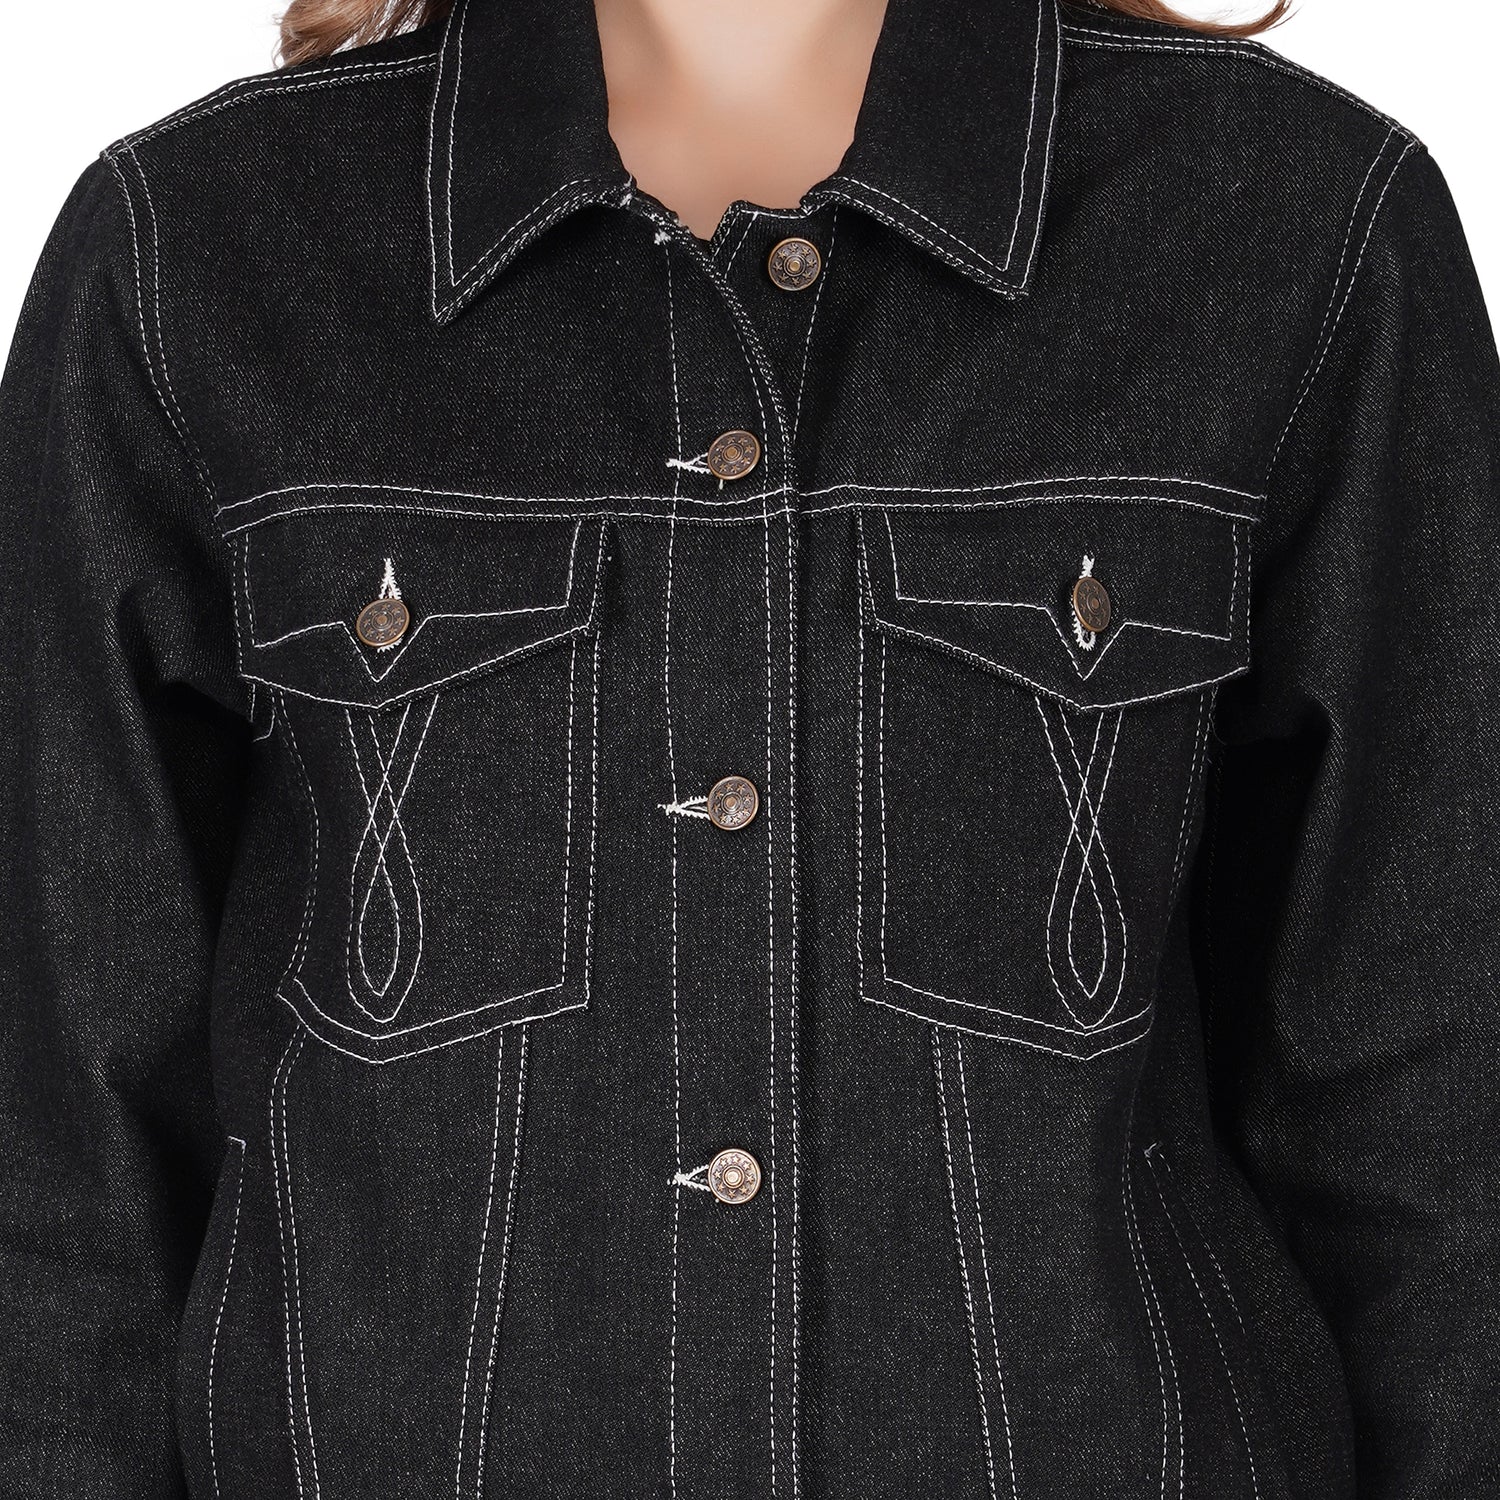 How To Wear A Denim Jacket With Black Jeans • Ready Sleek